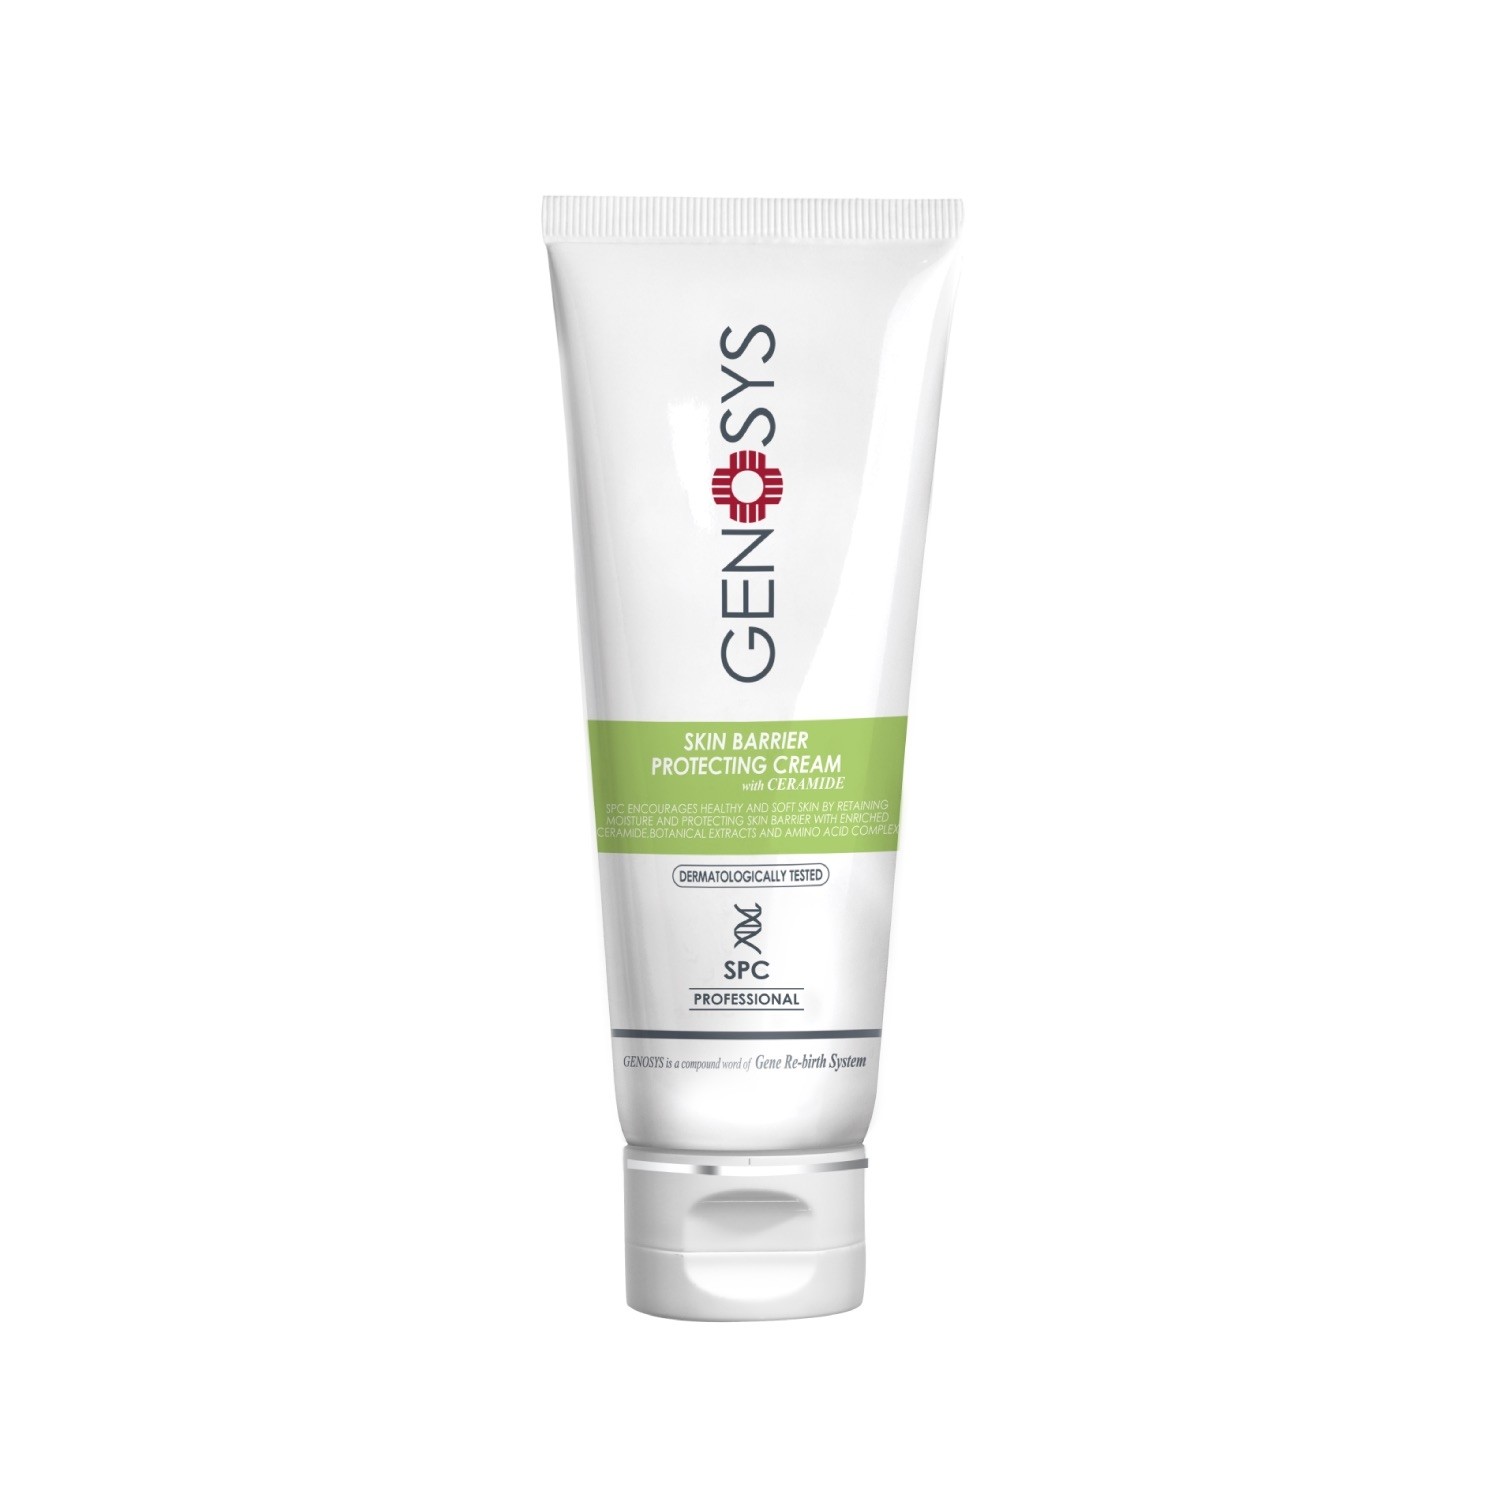 GENOSYS Skin Barrier Protecting Cream